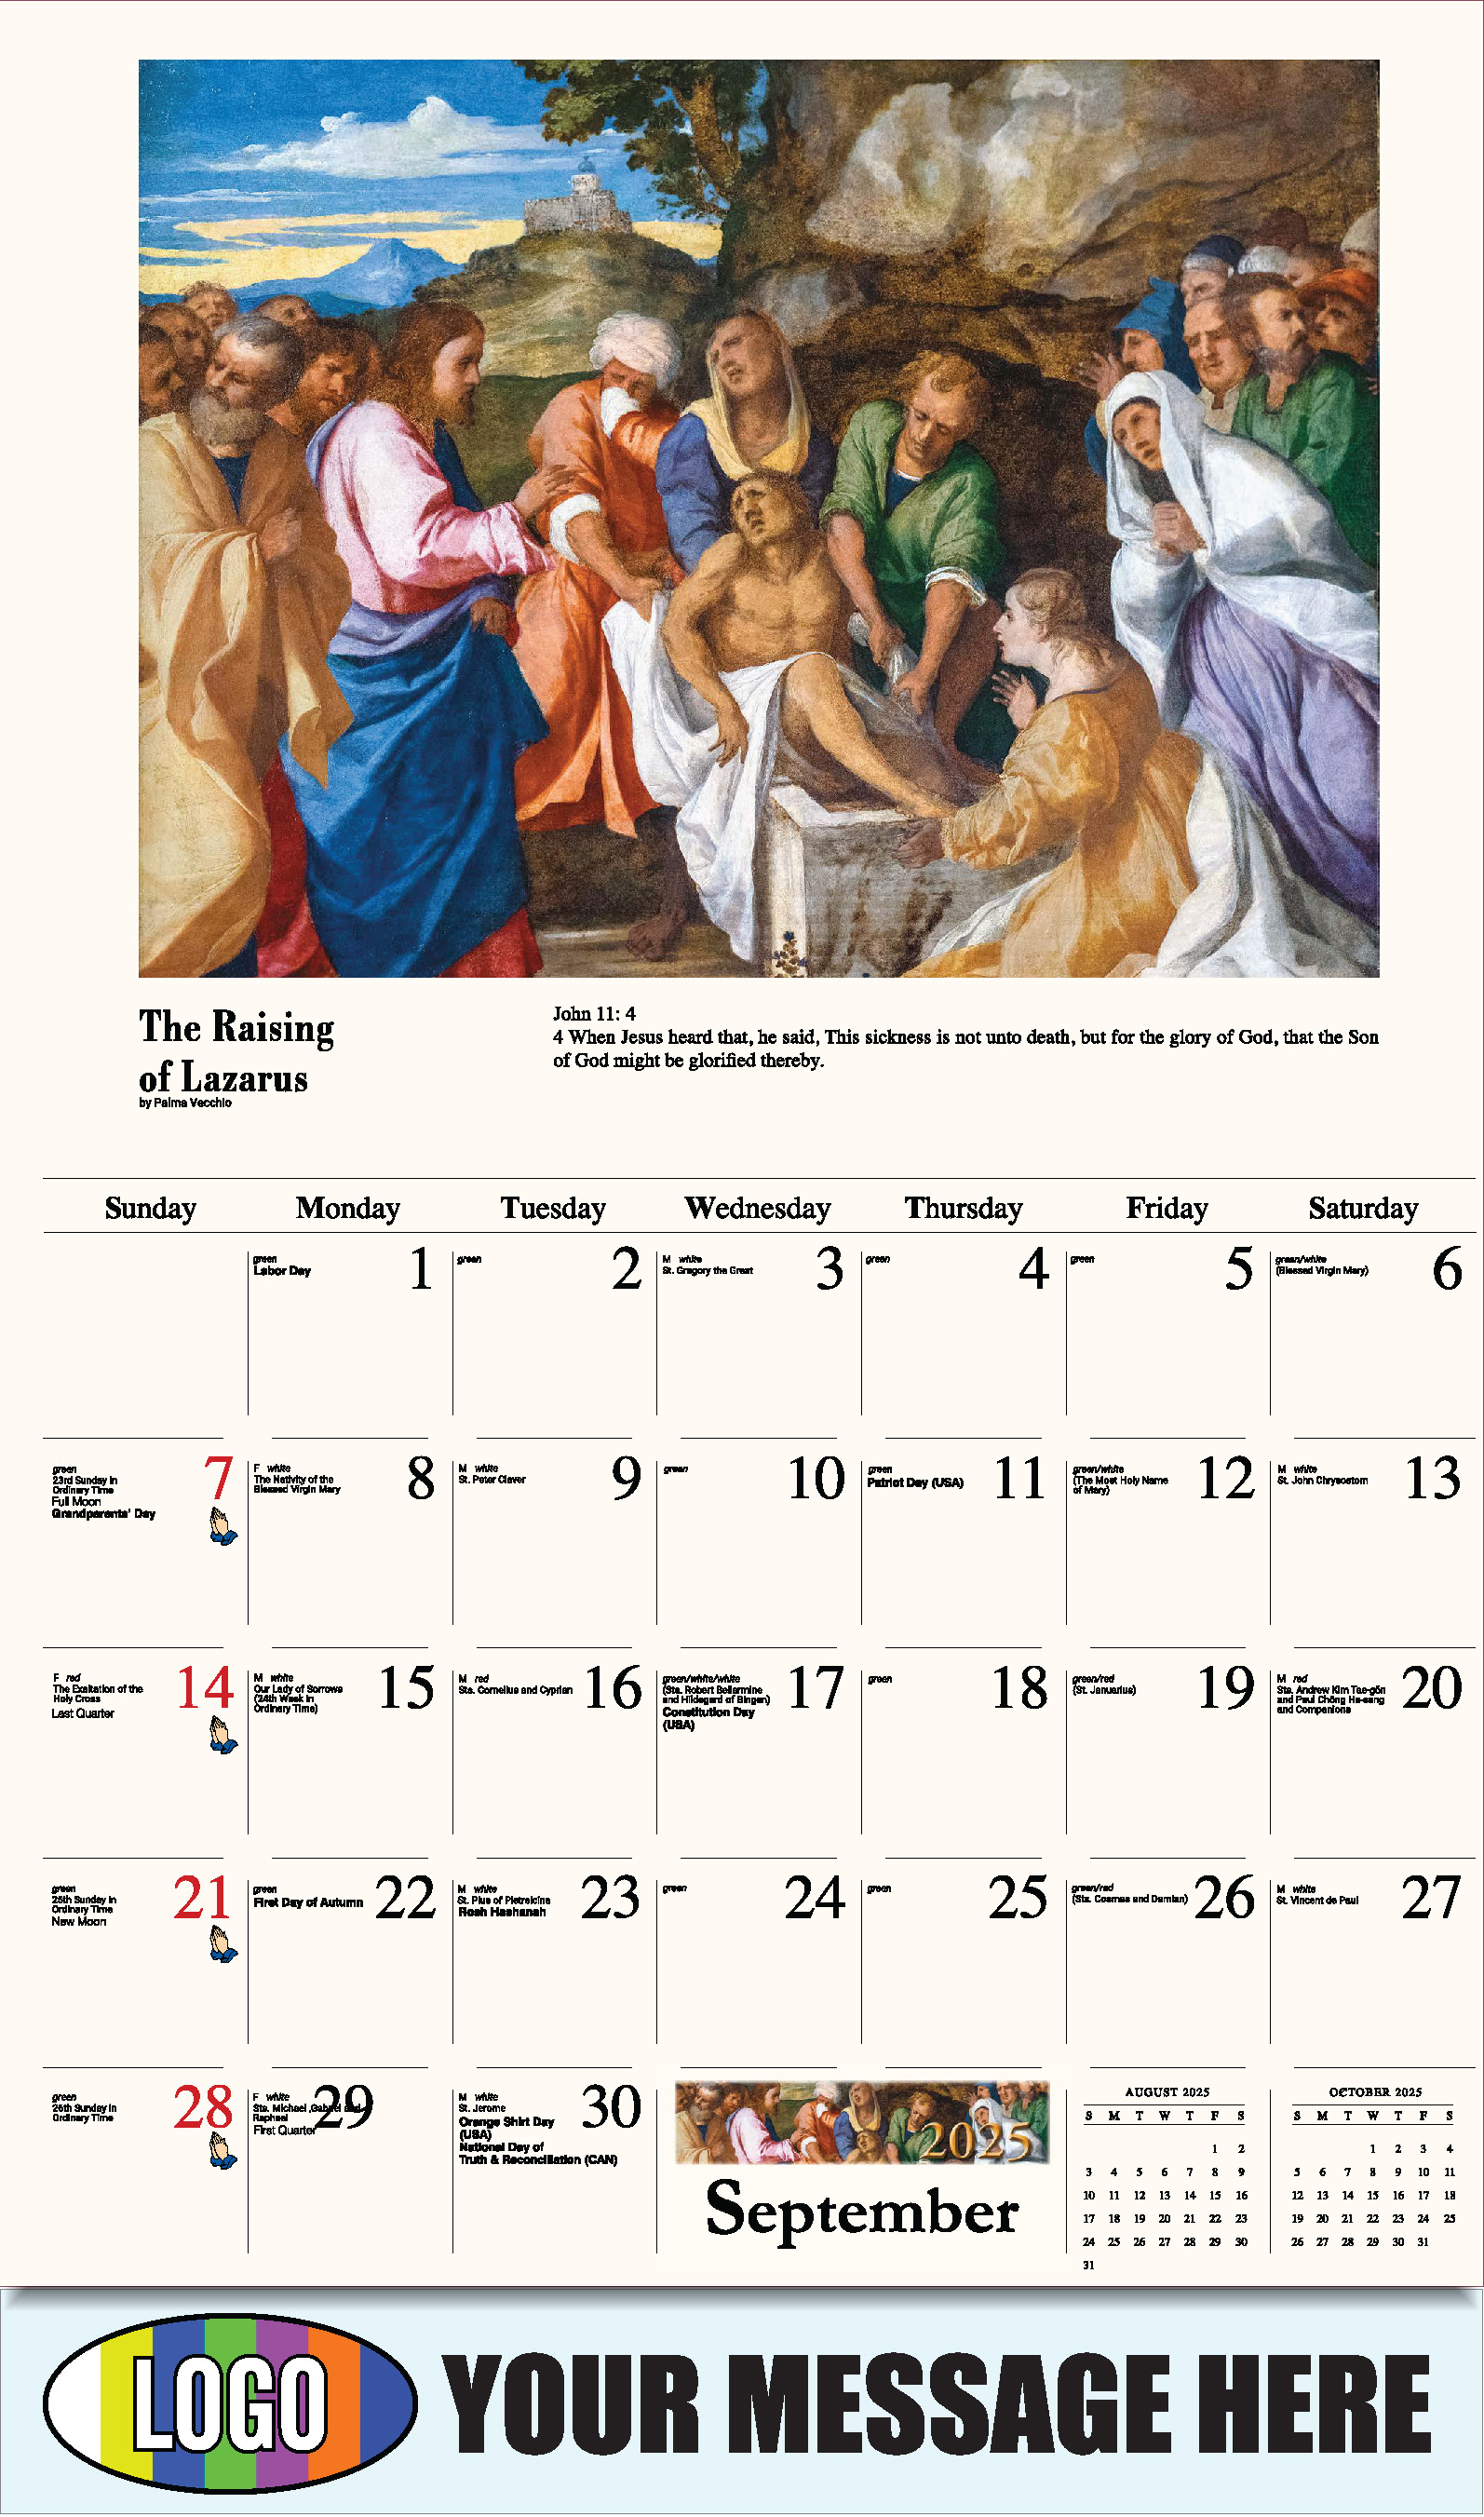 Catholic Inspirations 2025 Church Promotion Calendar - September